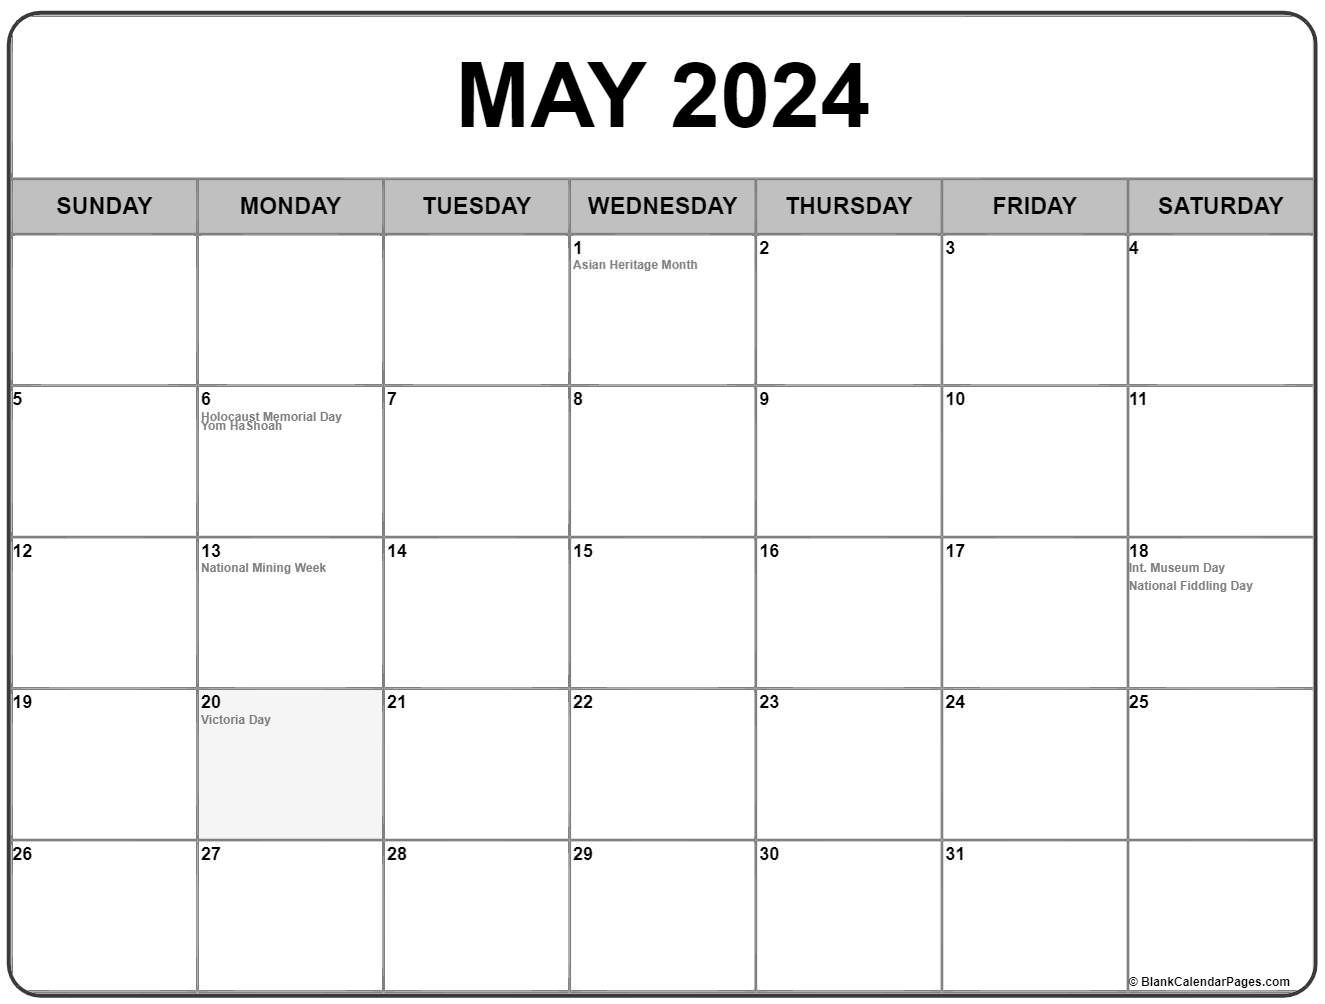 May Calendar 2021 With Holidays May 2021 calendar with holidays